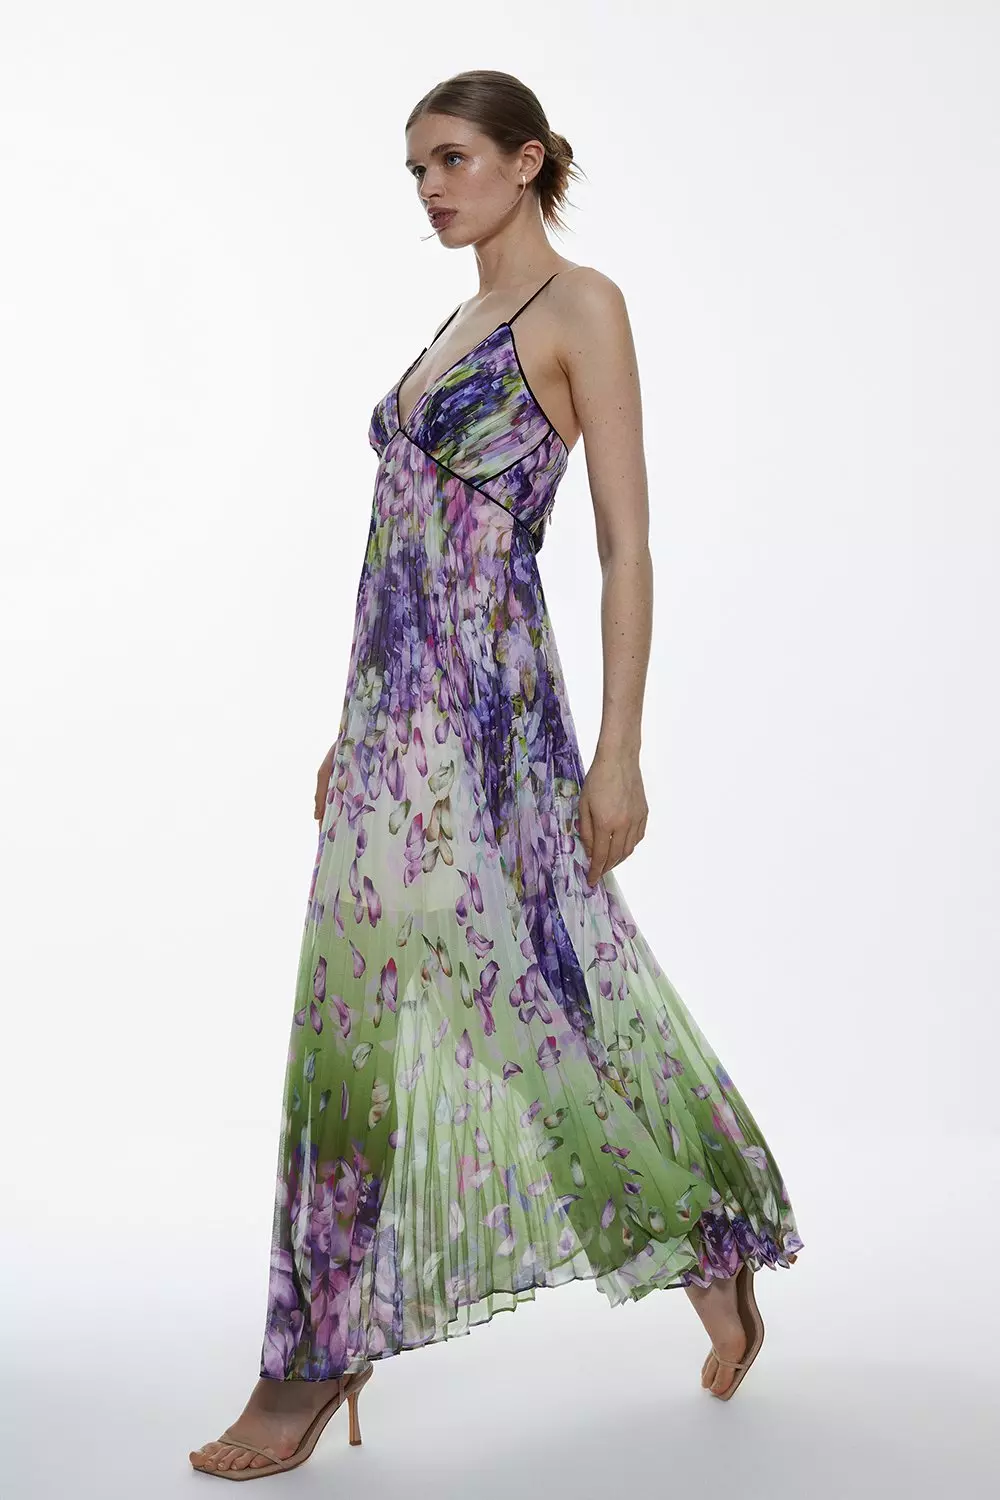 Blossom in Style: Popilush Unveils Exquisite Spring Dress